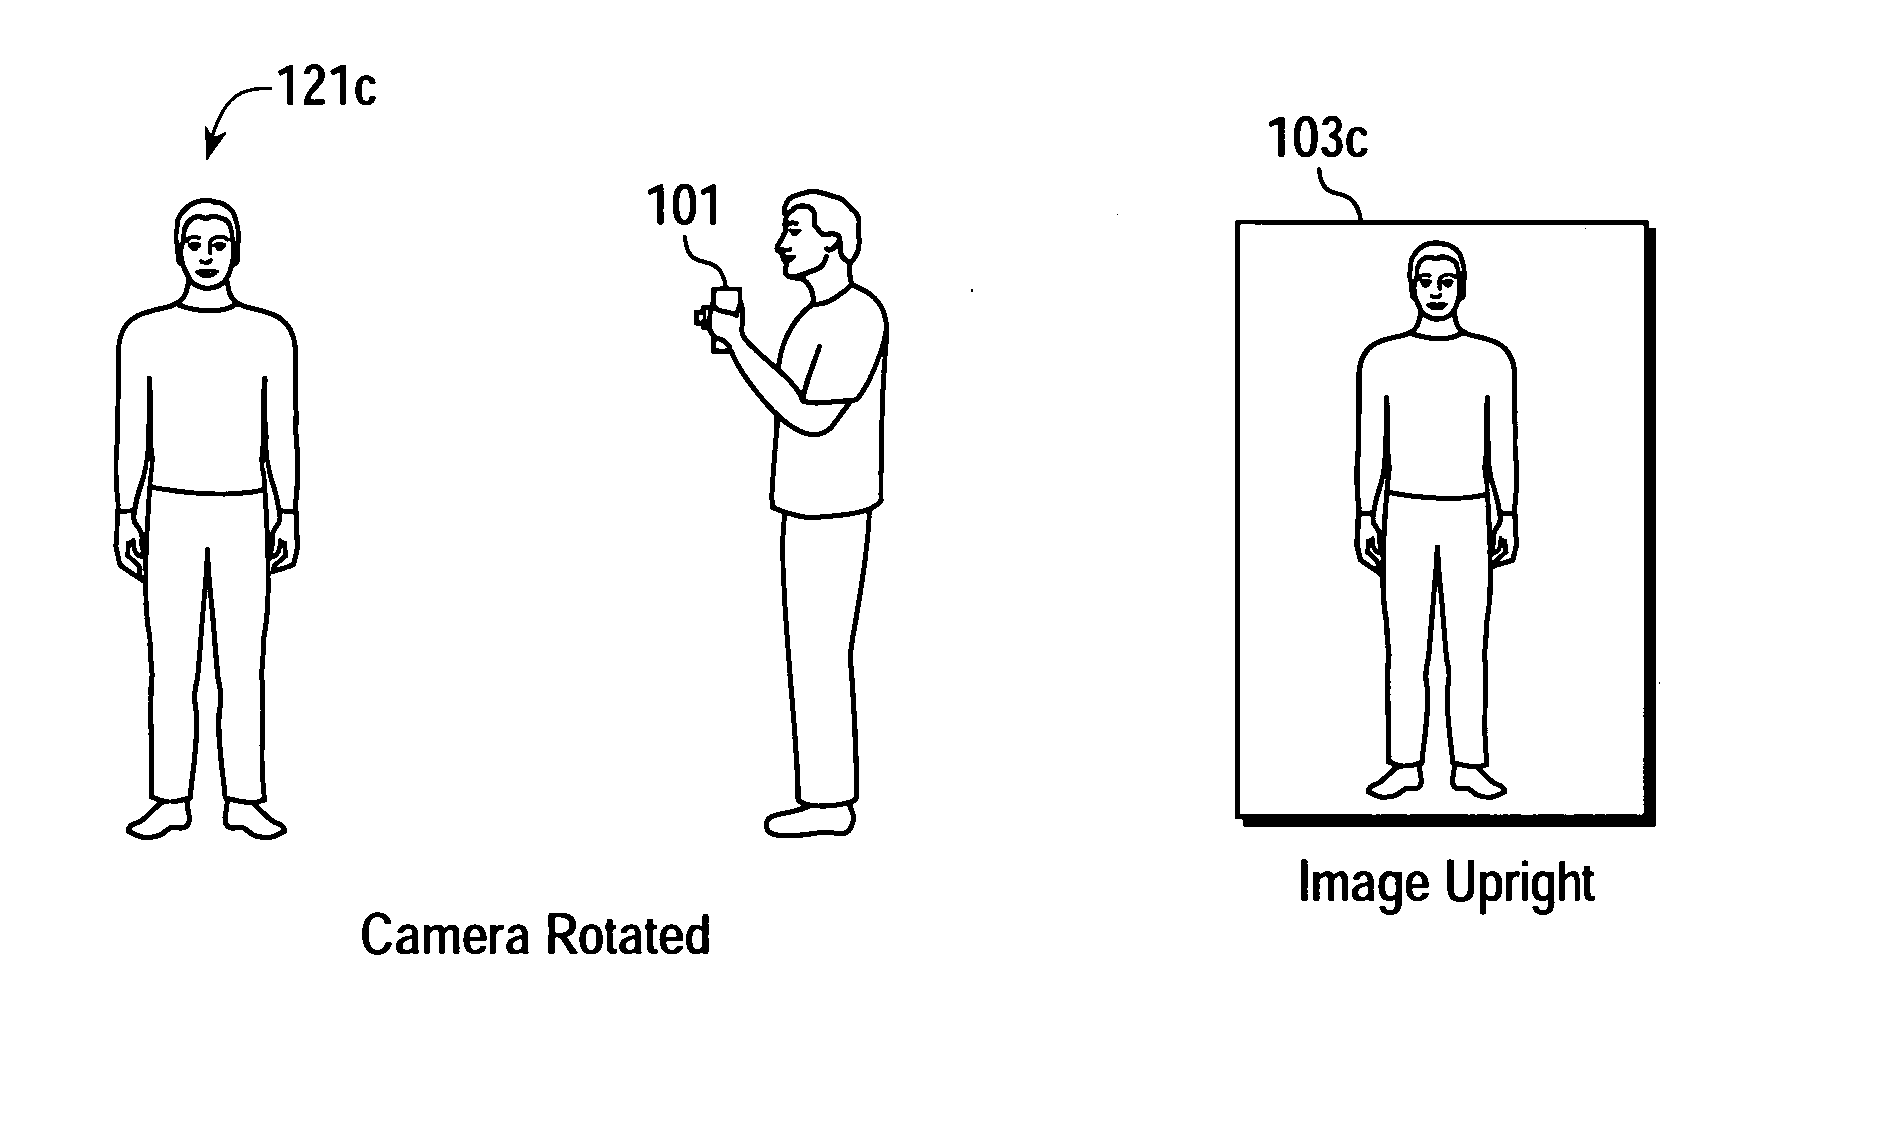 Image orientation apparatus and method